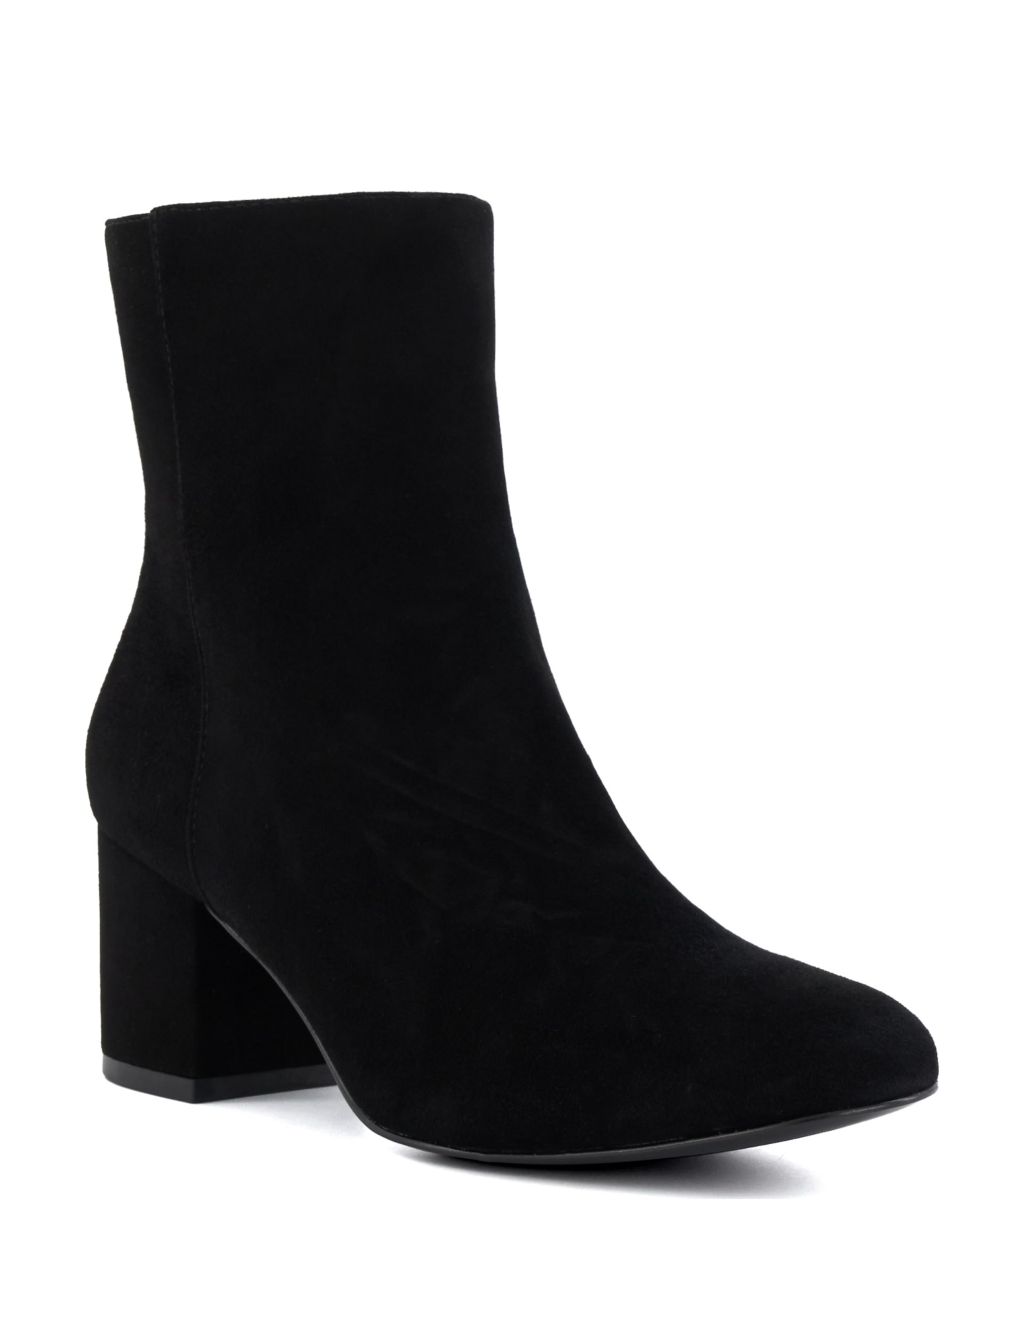 Suede Block Heel Ankle Boots | Dune London | M&S